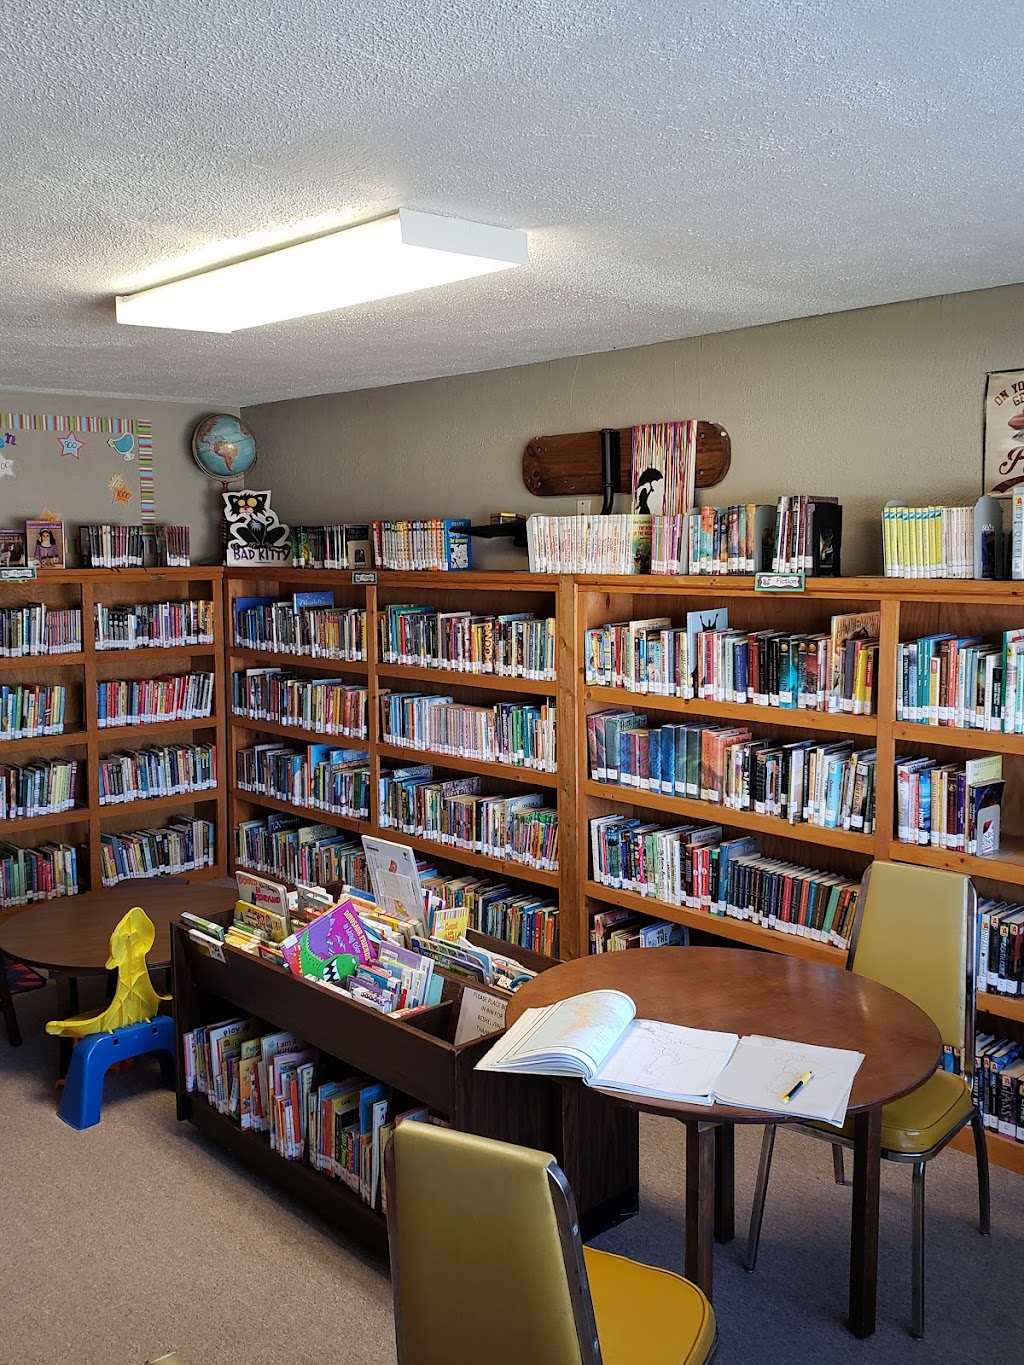 Rhome Community Library | Photo 3 of 4 | Address: 265 B.C. Rhome Ave, Rhome, TX 76078, USA | Phone: (817) 636-2767